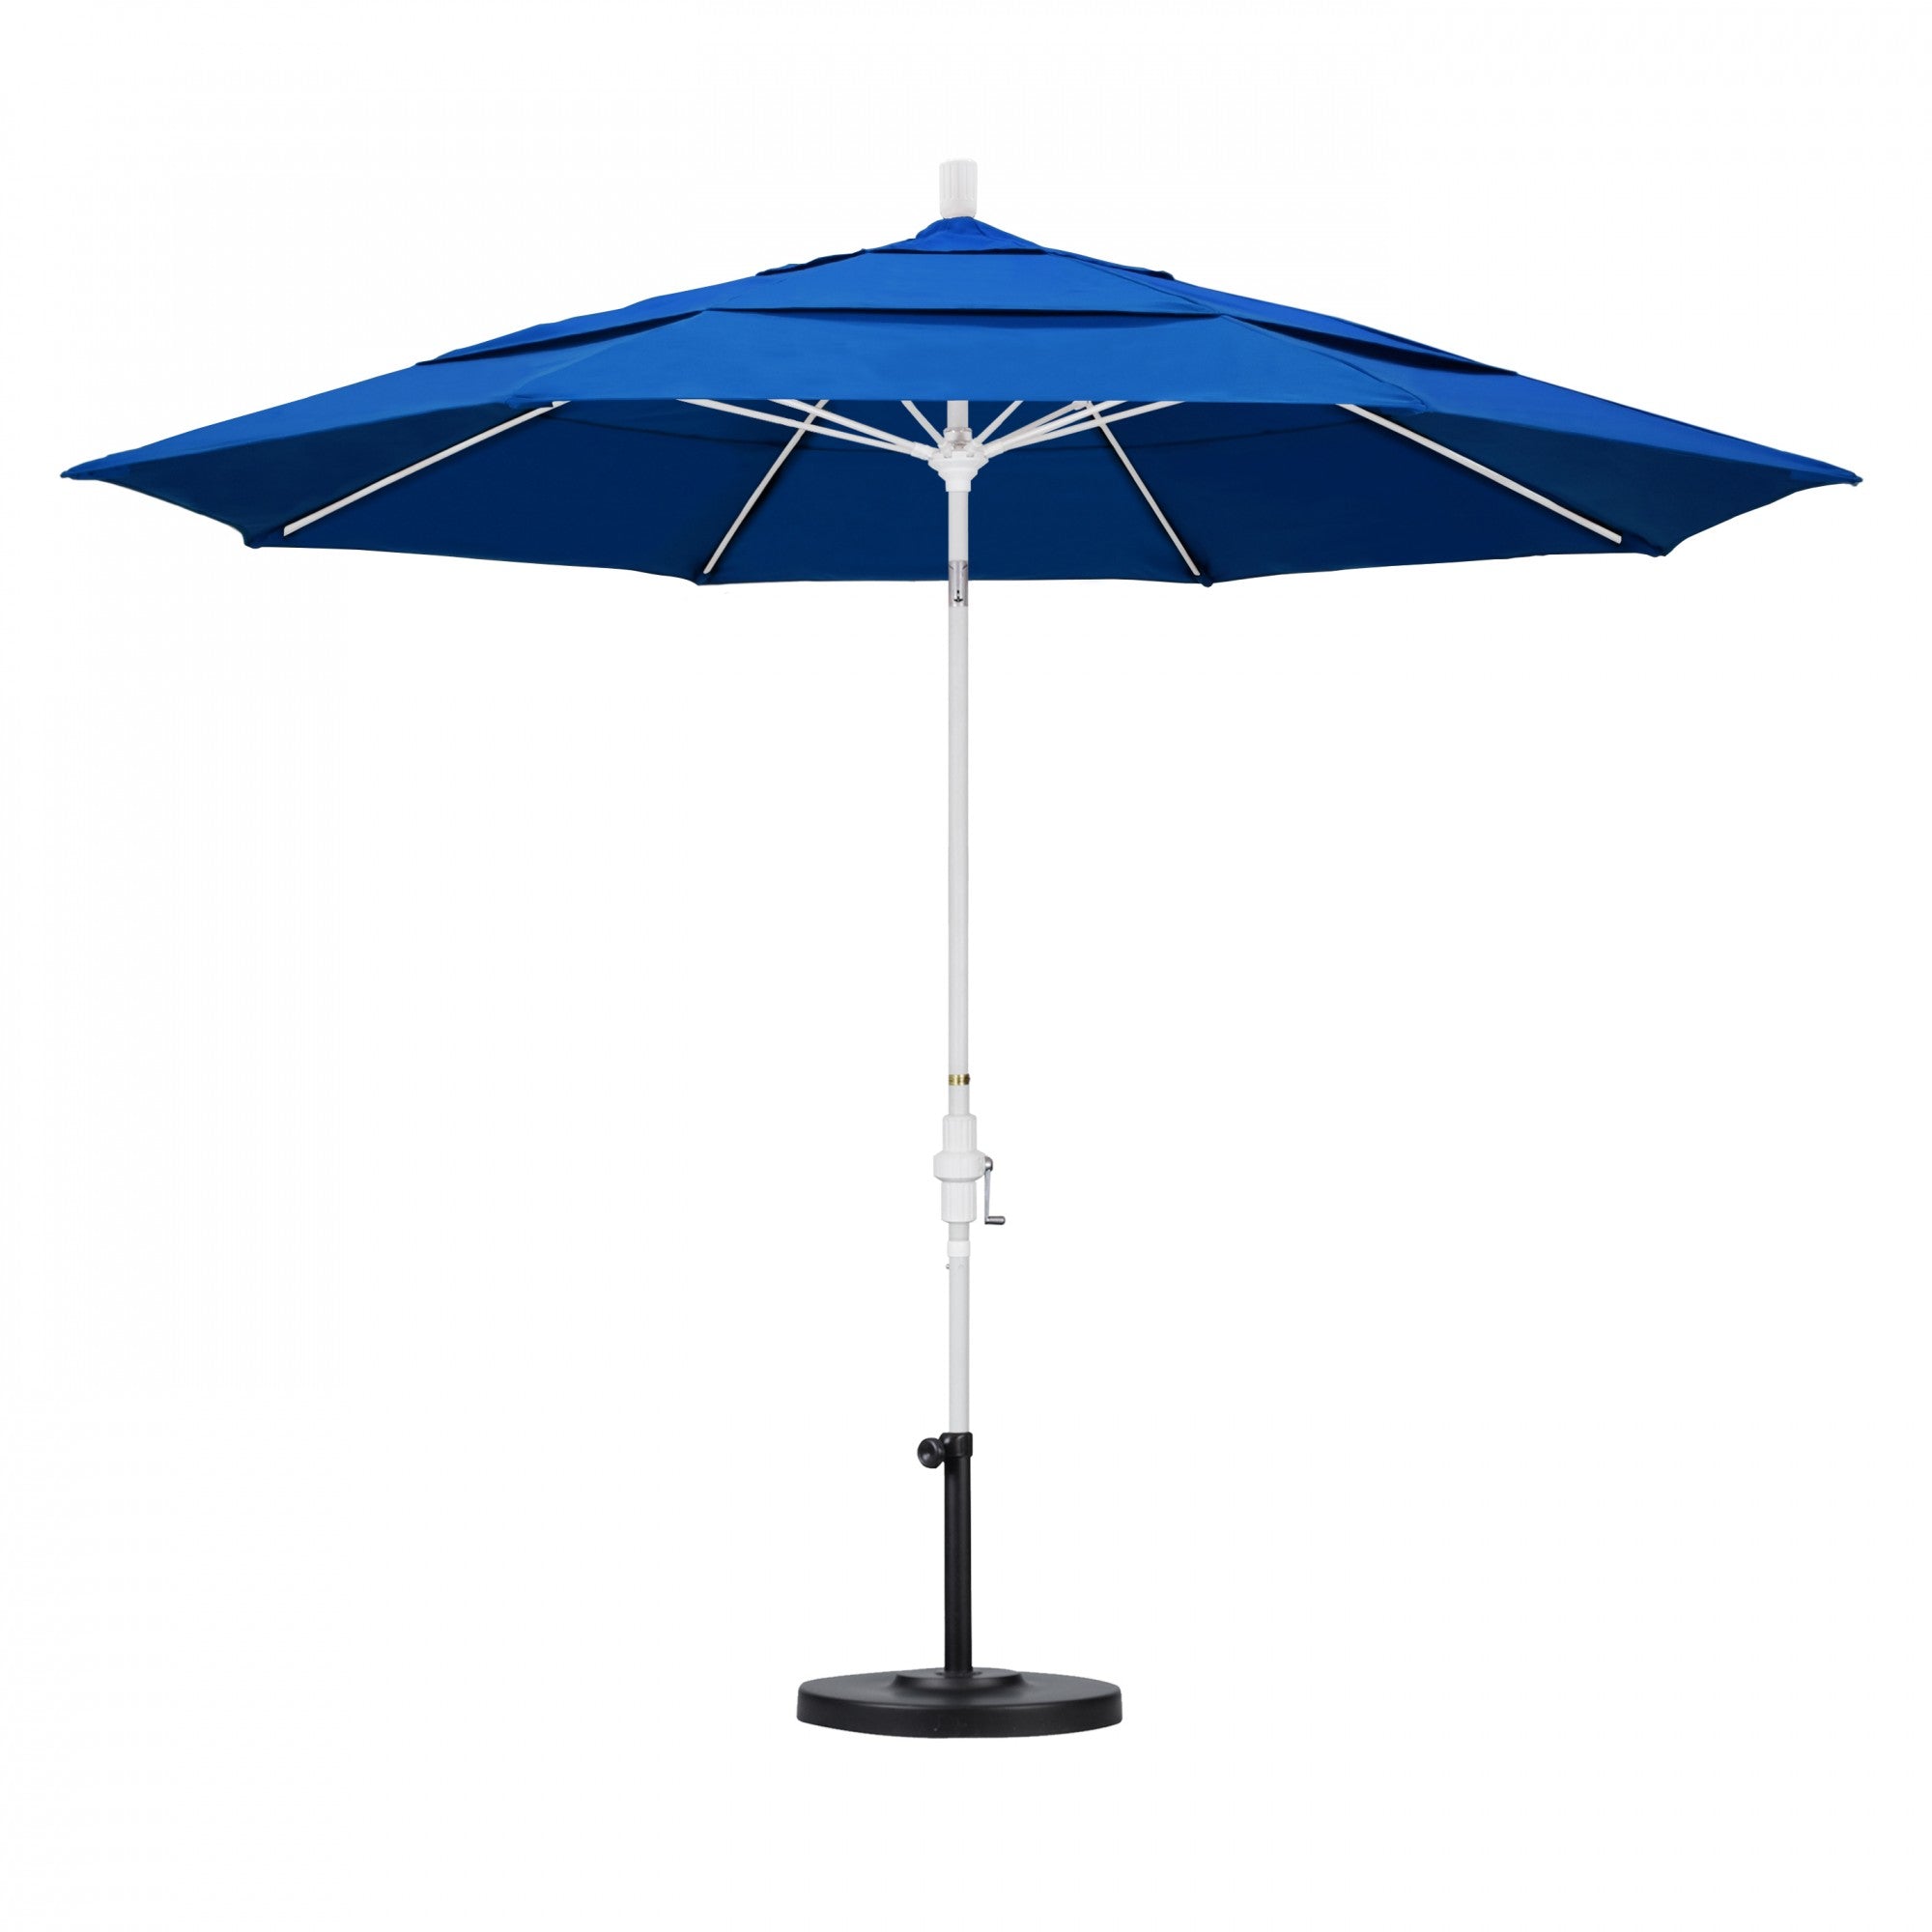 California Umbrella - 11' - Patio Umbrella Umbrella - Aluminum Pole - Royal Blue - Olefin - GSCUF118170-F03-DWV